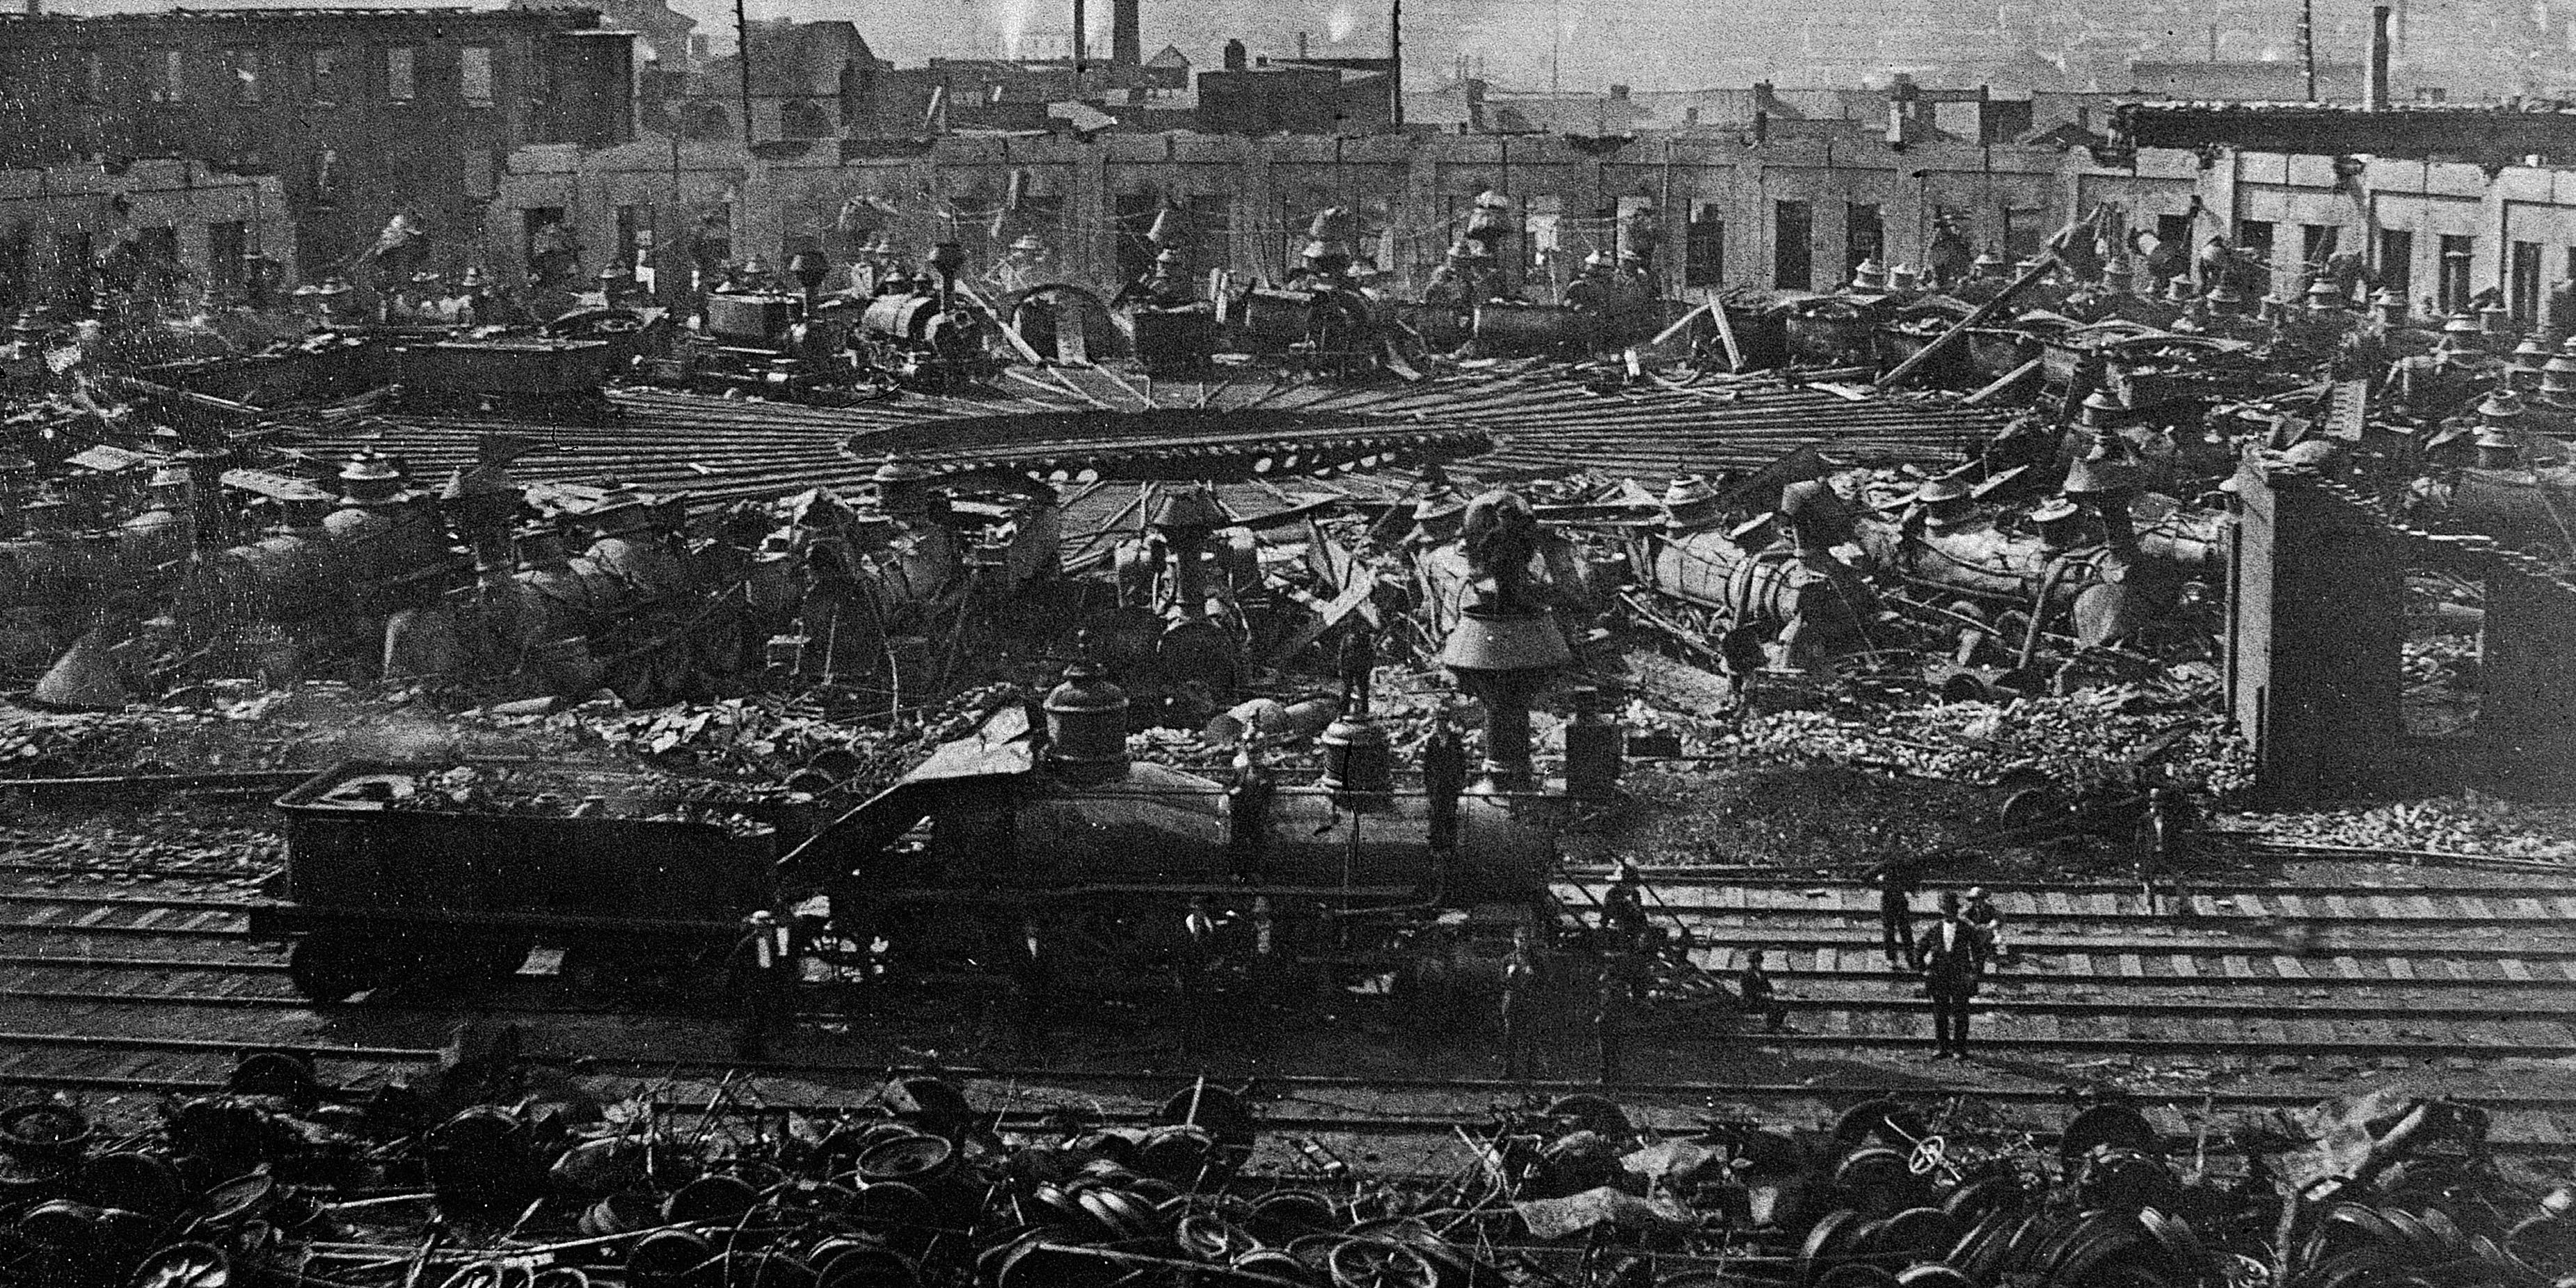 Railroad strike destruction at the 26th Street Pennsylvania Railroad Round House, July 14-27 1877, Pittsburgh, Pennsylvania.